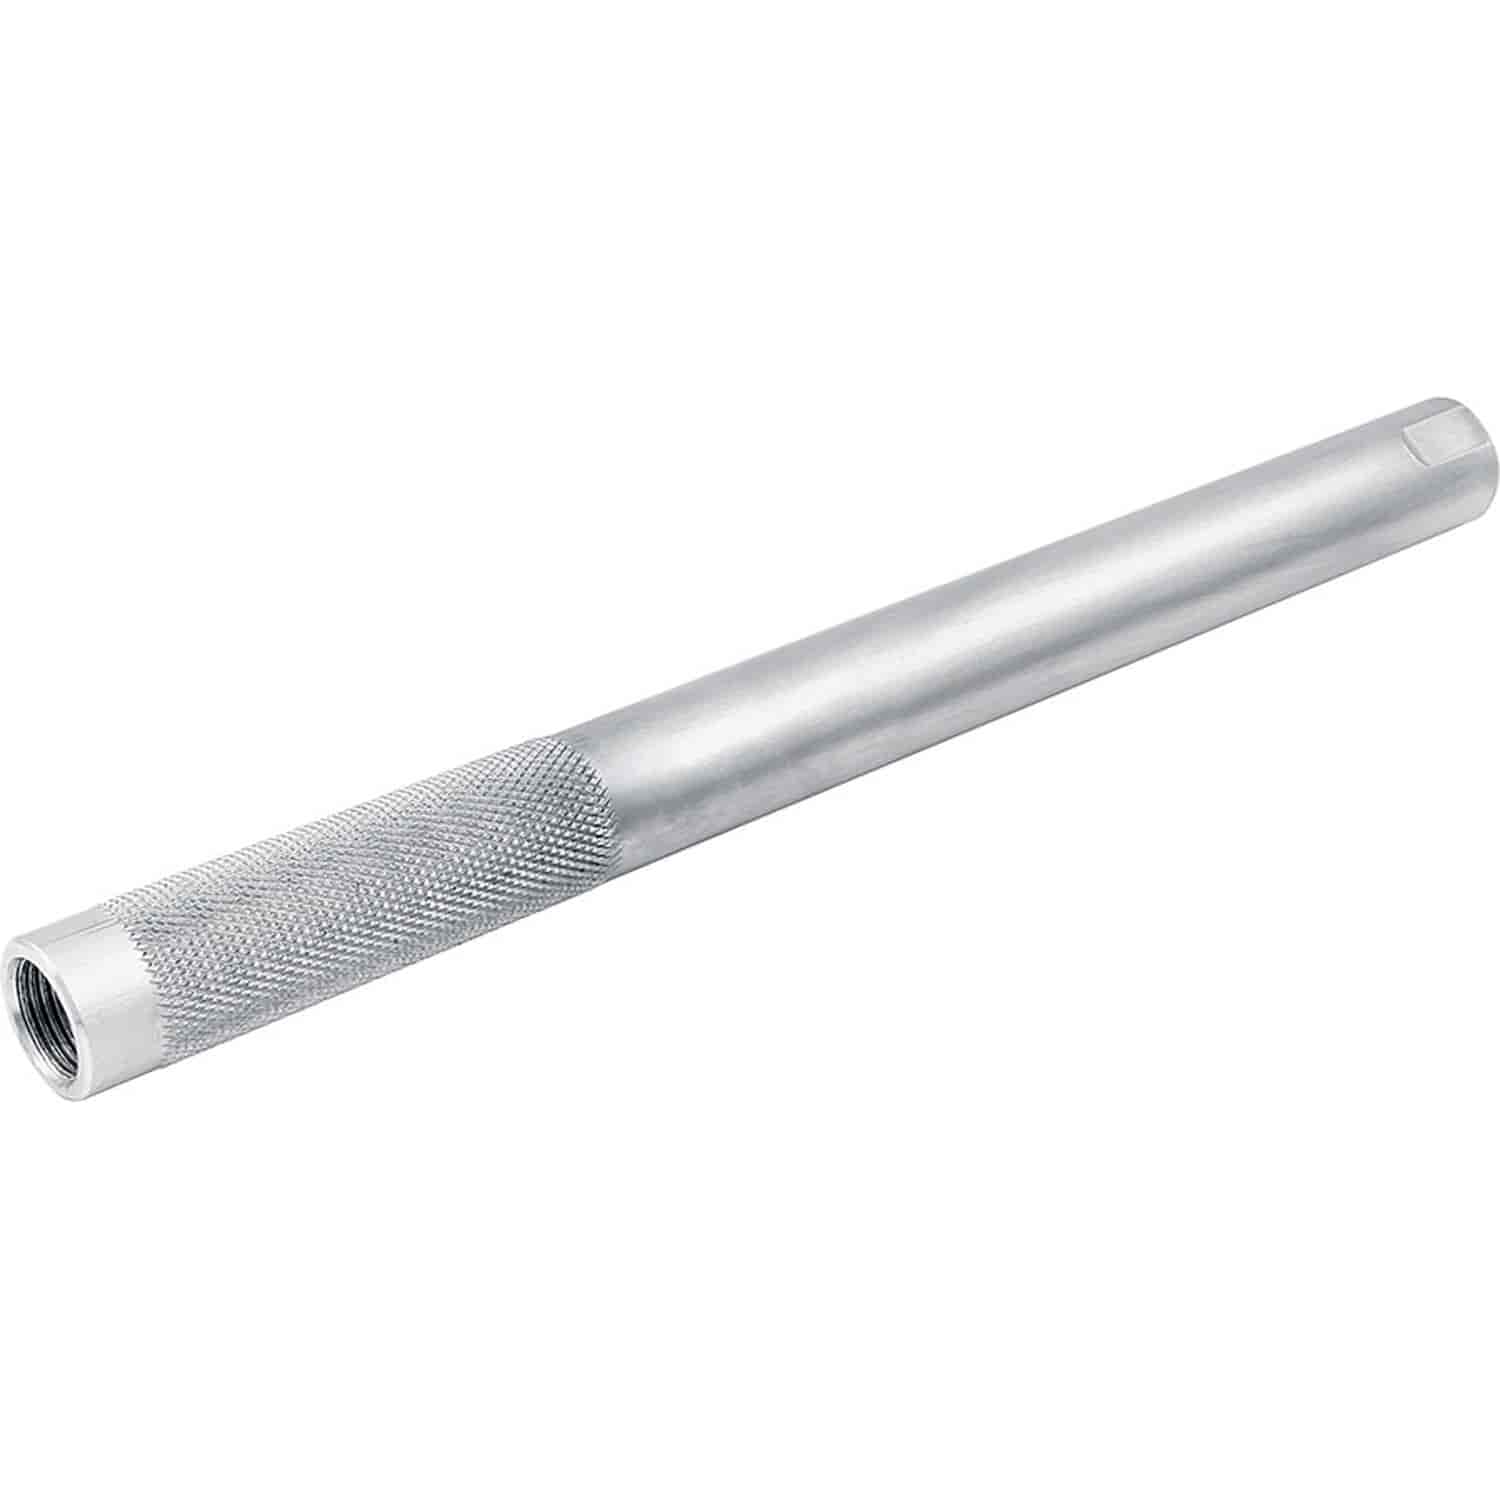 Swedged Aluminum Tie Rod Tube Length: 9